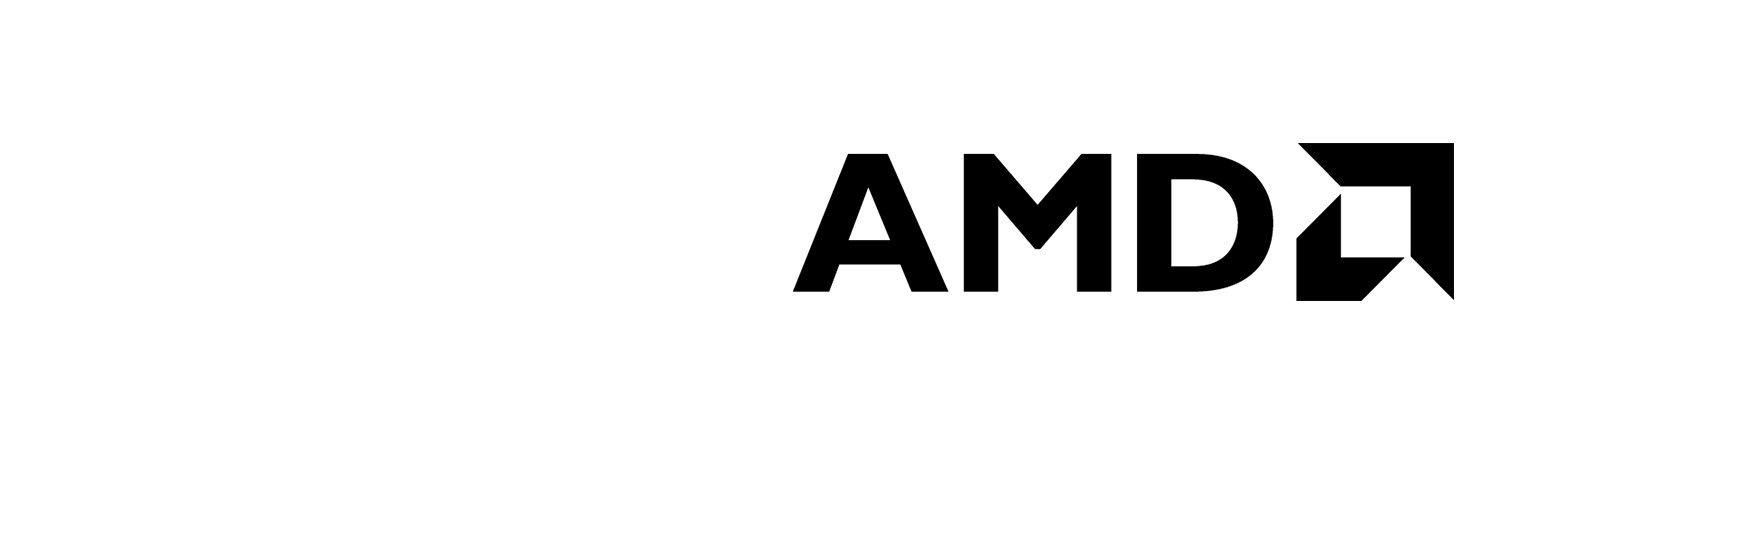 AMD Logo - AMD | Scuderia Ferrari